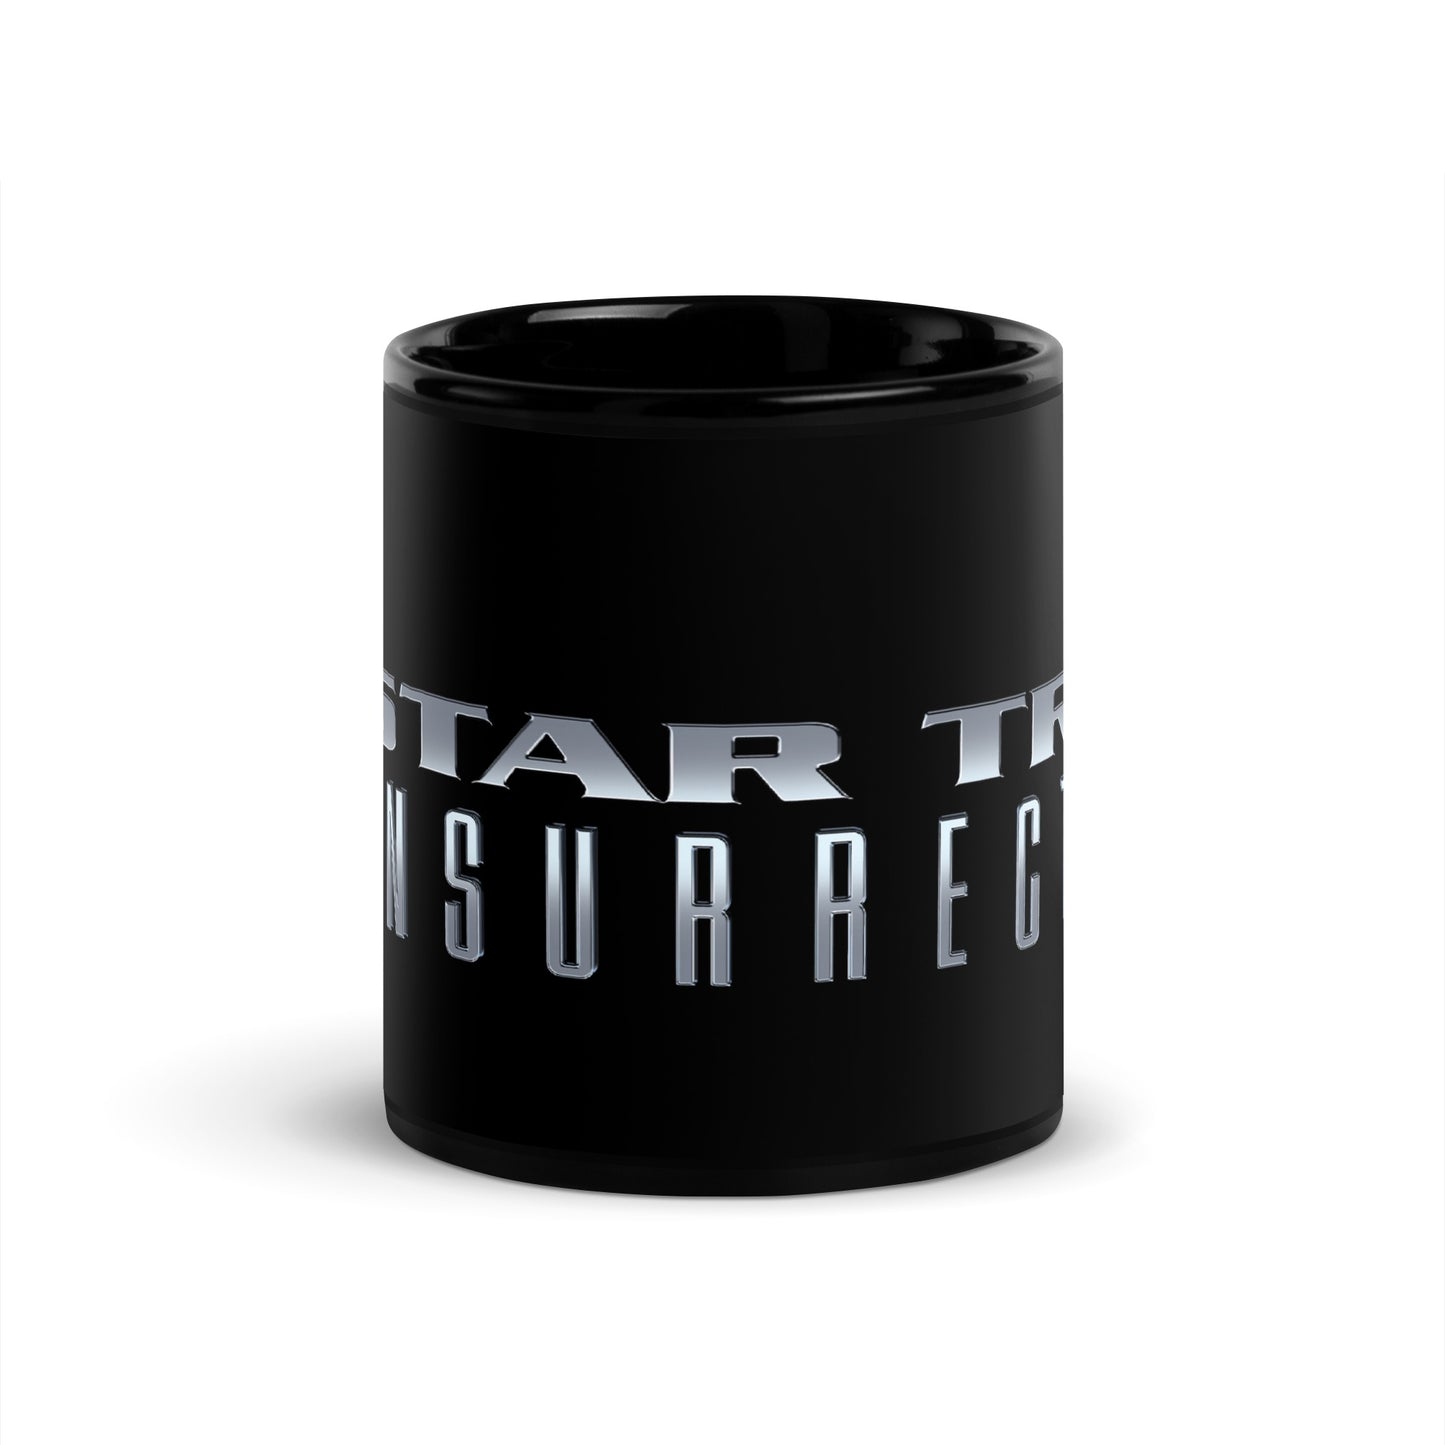 Star Trek IX: Insurrection Mug noir 25e anniversaire